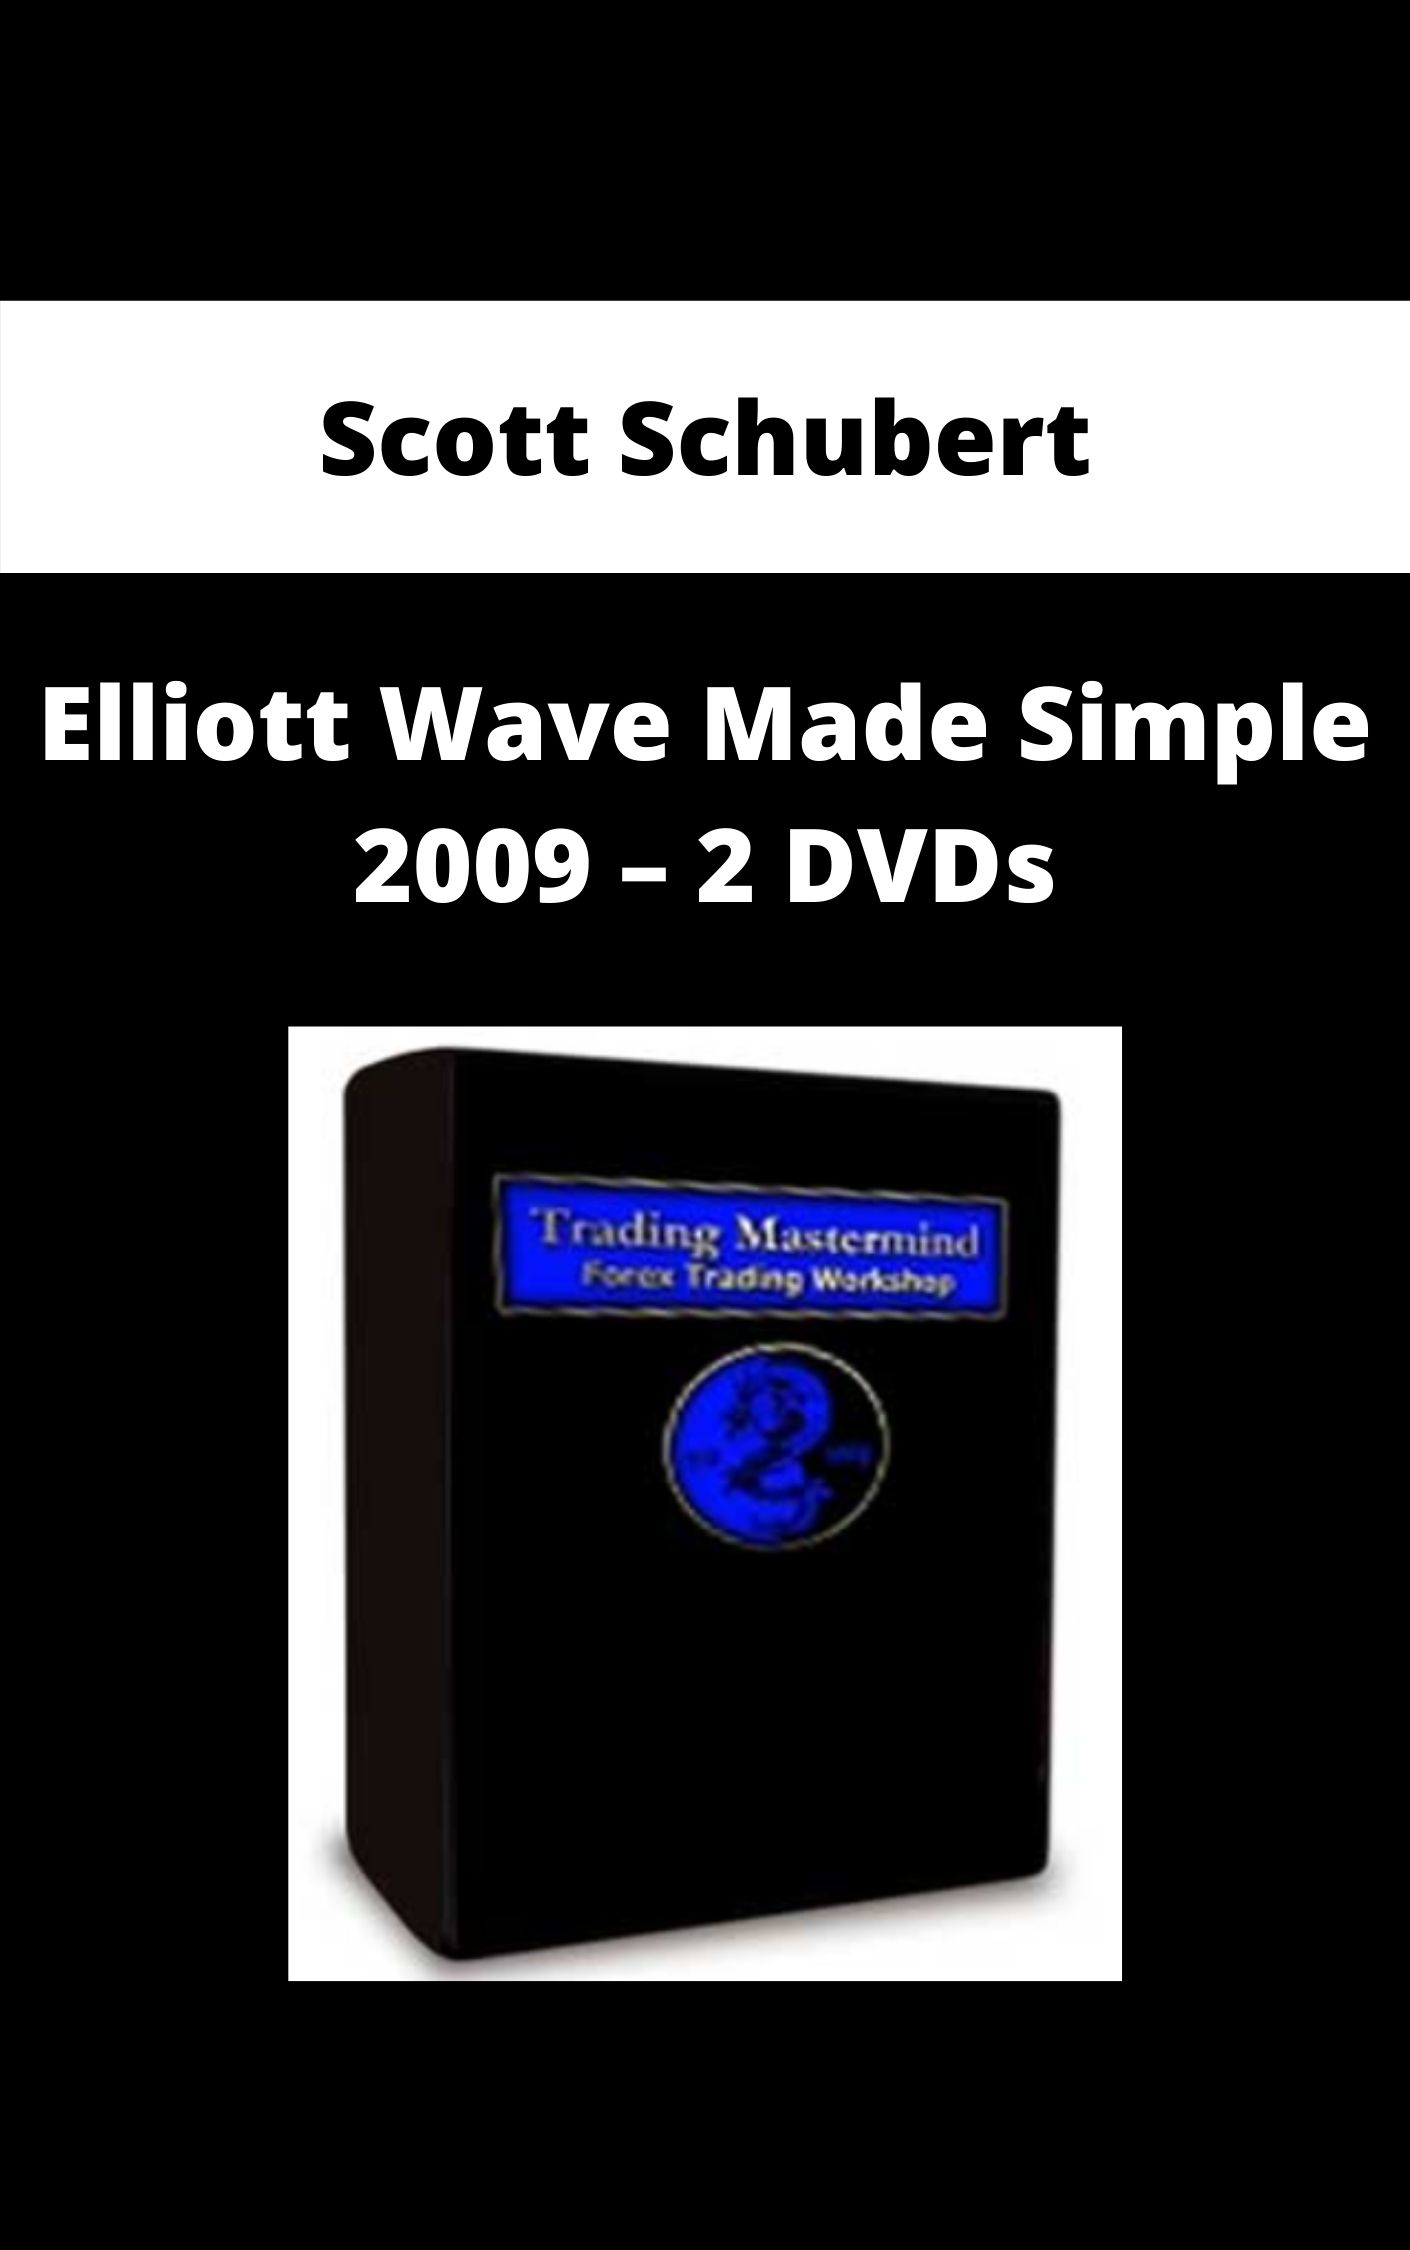 Scott Schubert – Elliott Wave Made Simple 2009 – 2 DVDs